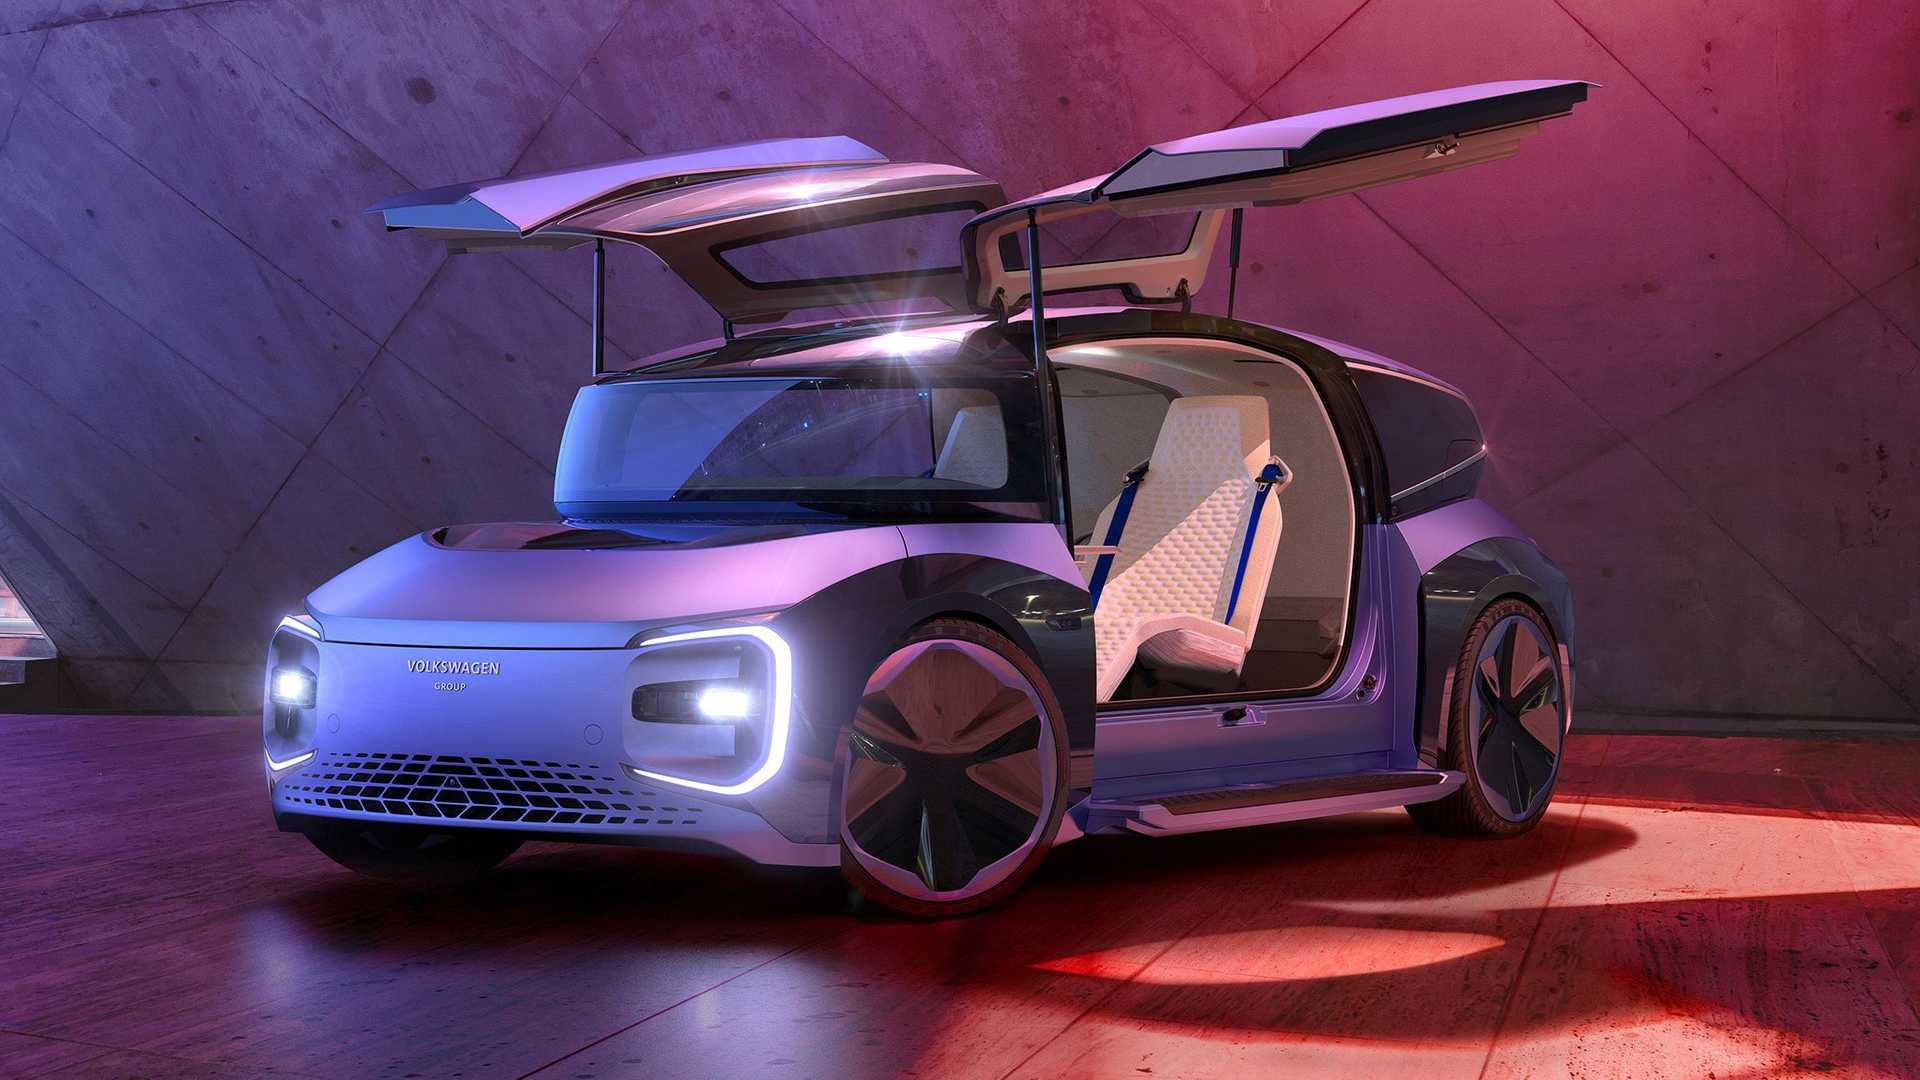 Volkswagen mostra como será o futuro dos carros elétricos sem motorista ao apresentar o modelo Gen.Travel